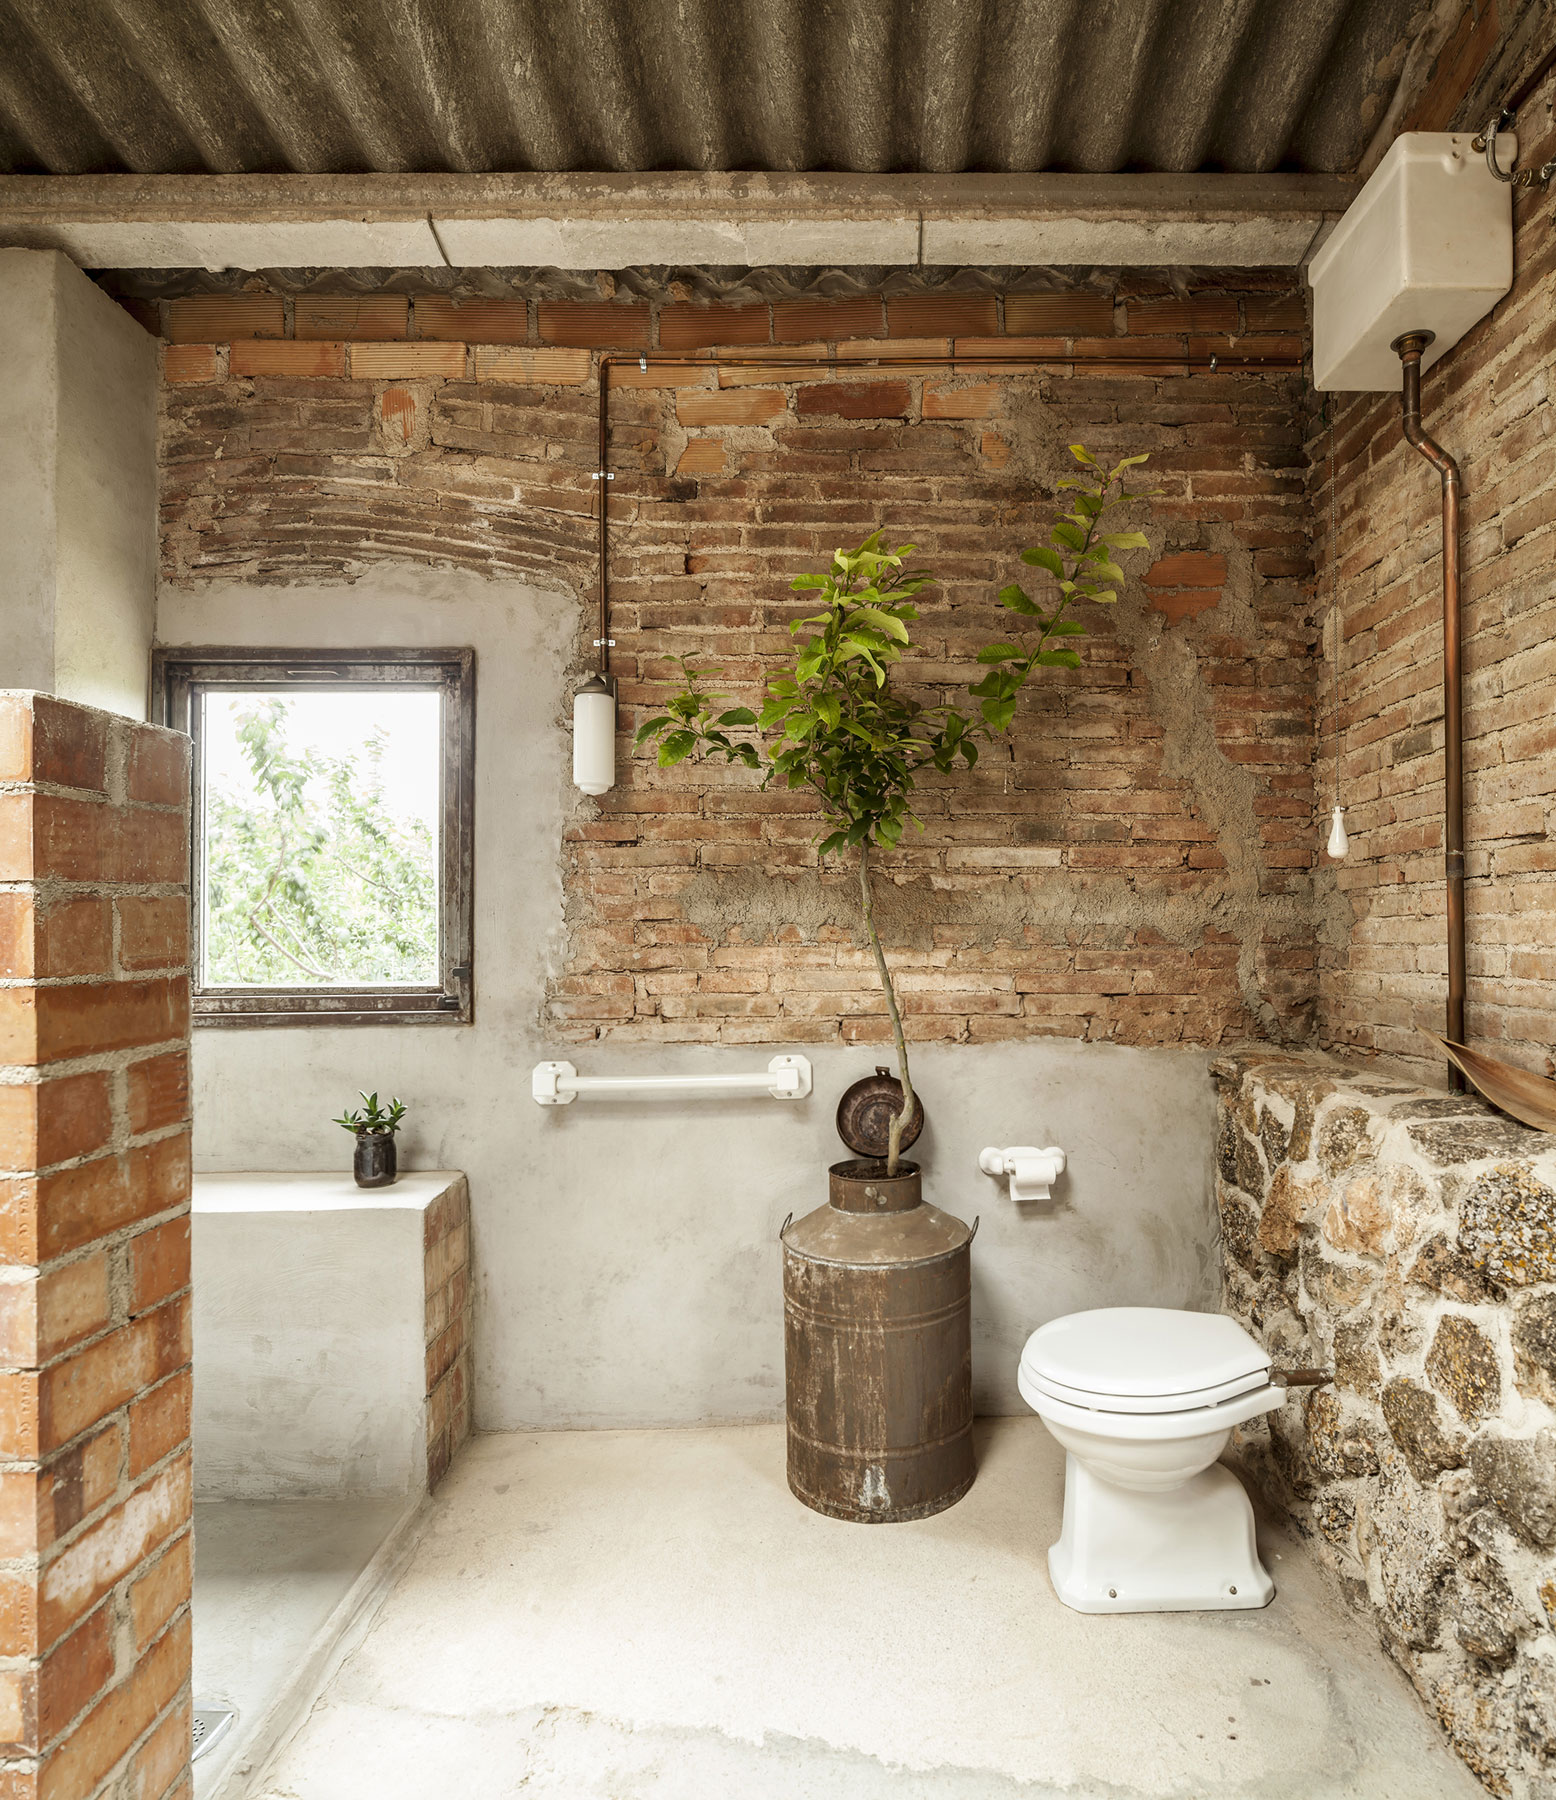 Dressing Room & Bath Room for a Garden / Clara Nubiola (11)